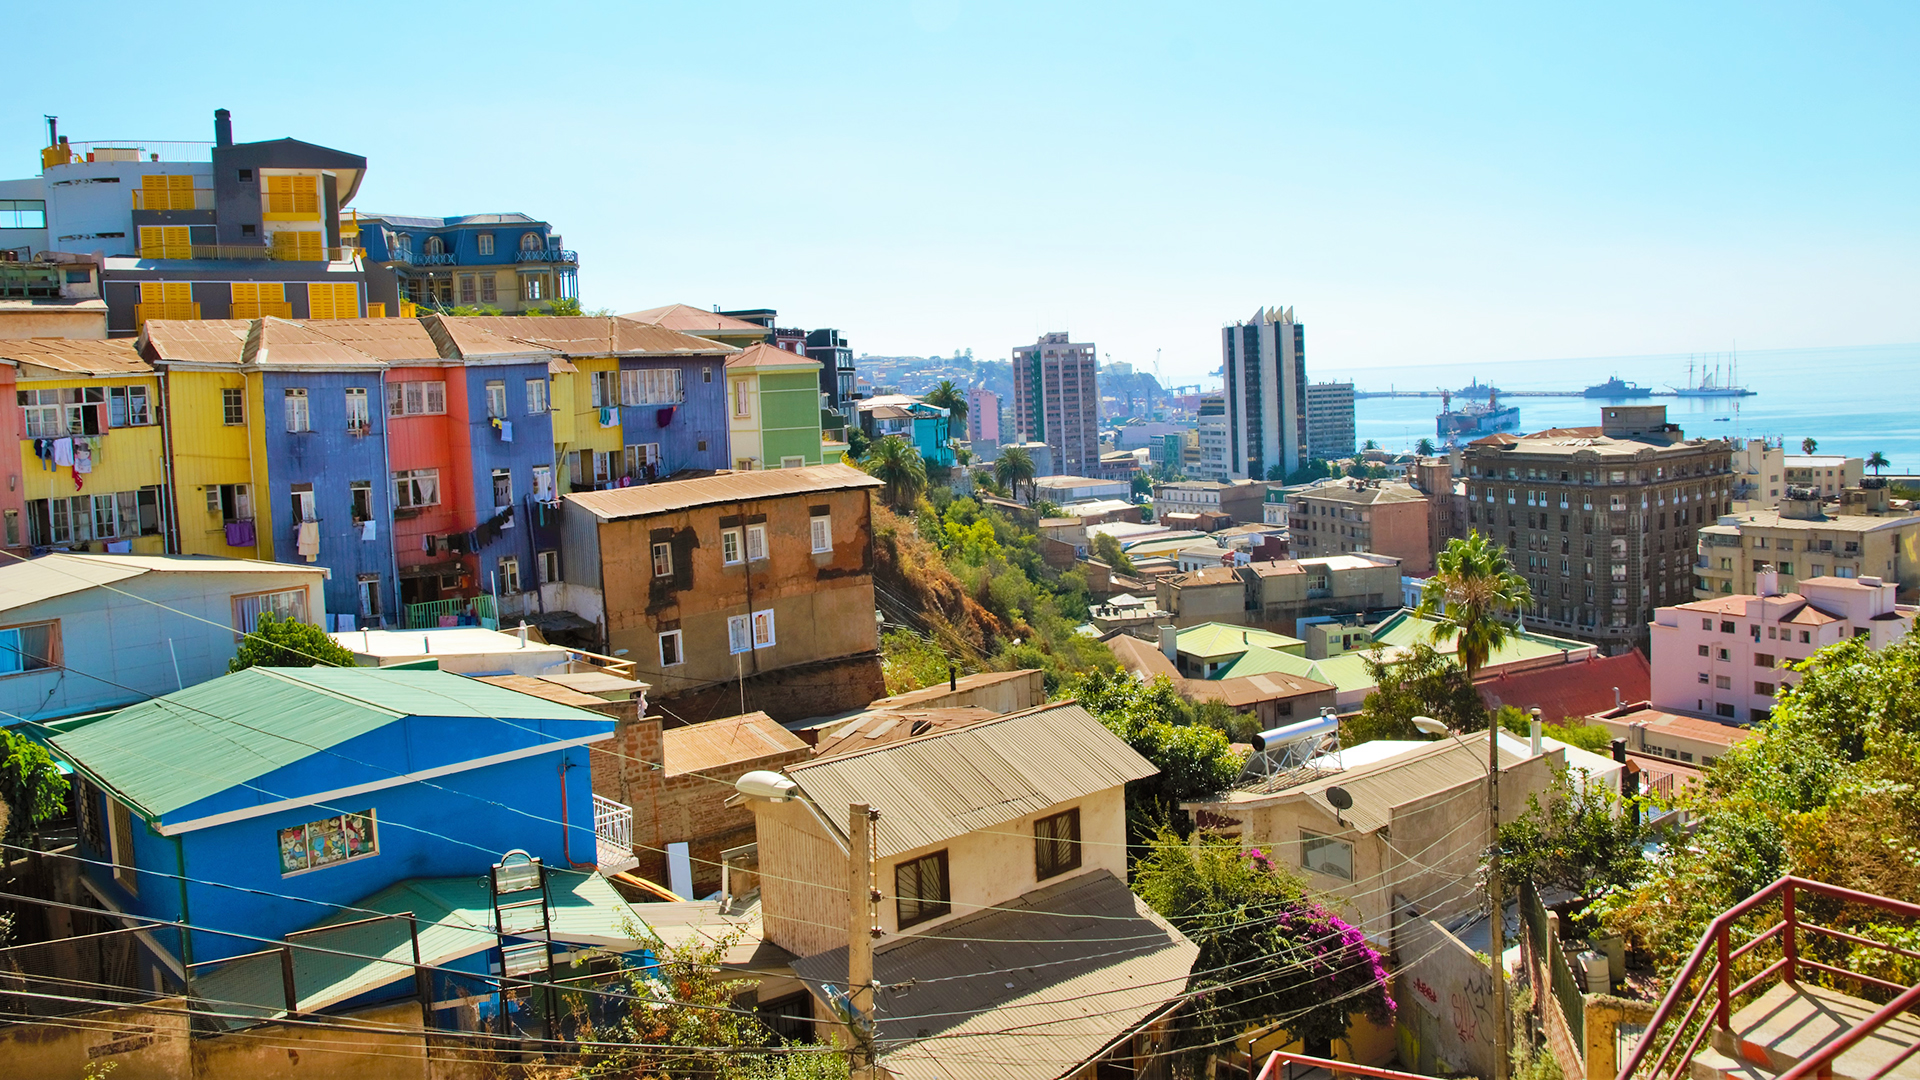 Waterfront Cities of the World - S5E4 - Valparaiso